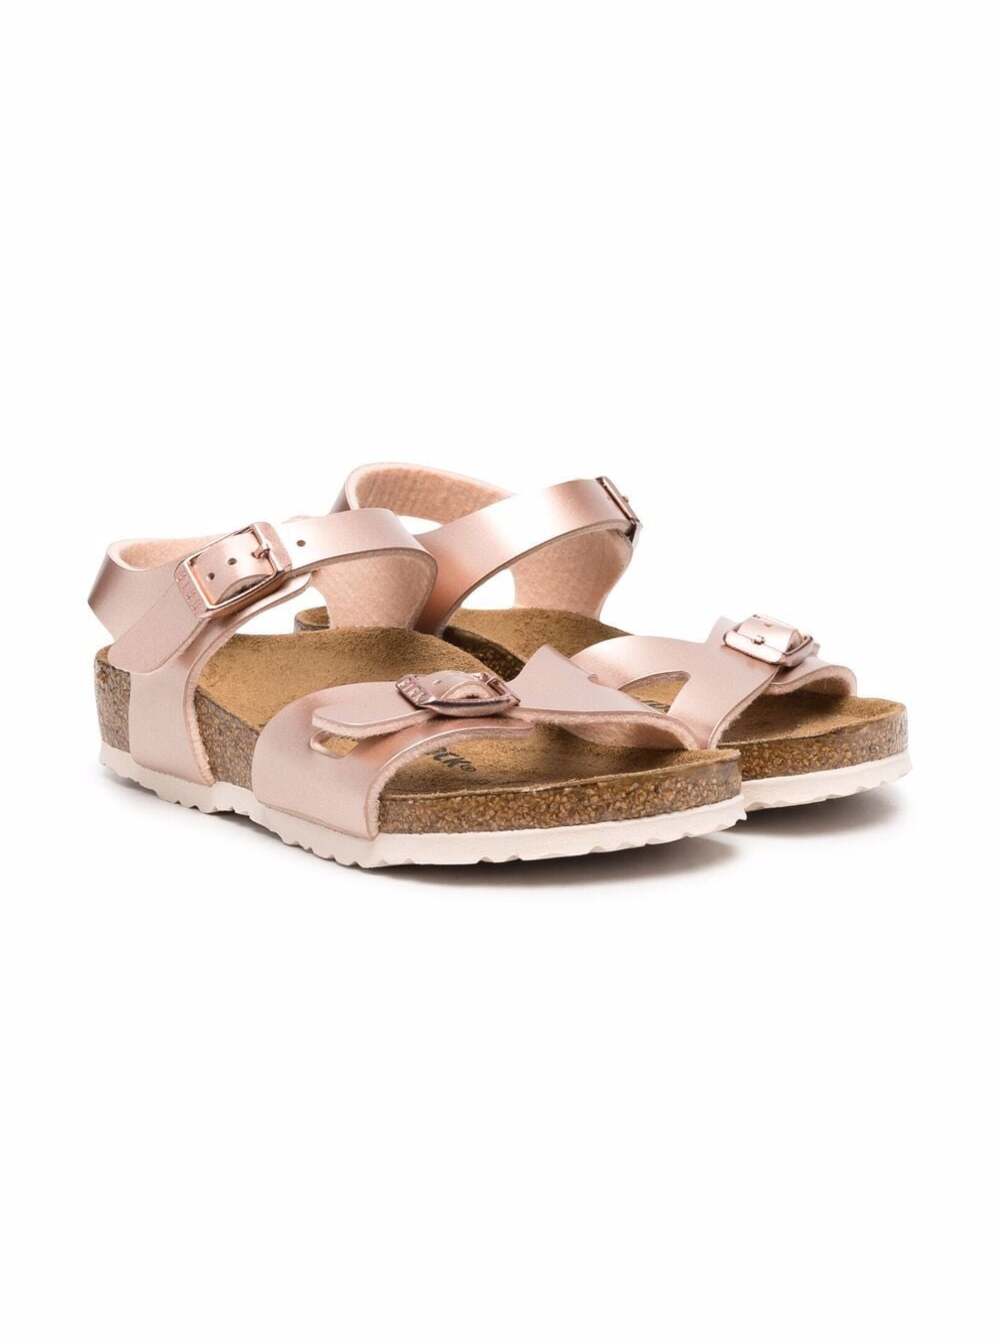 Shop Birkenstock Kids Girls Rio Electric Pink Leather Sandals